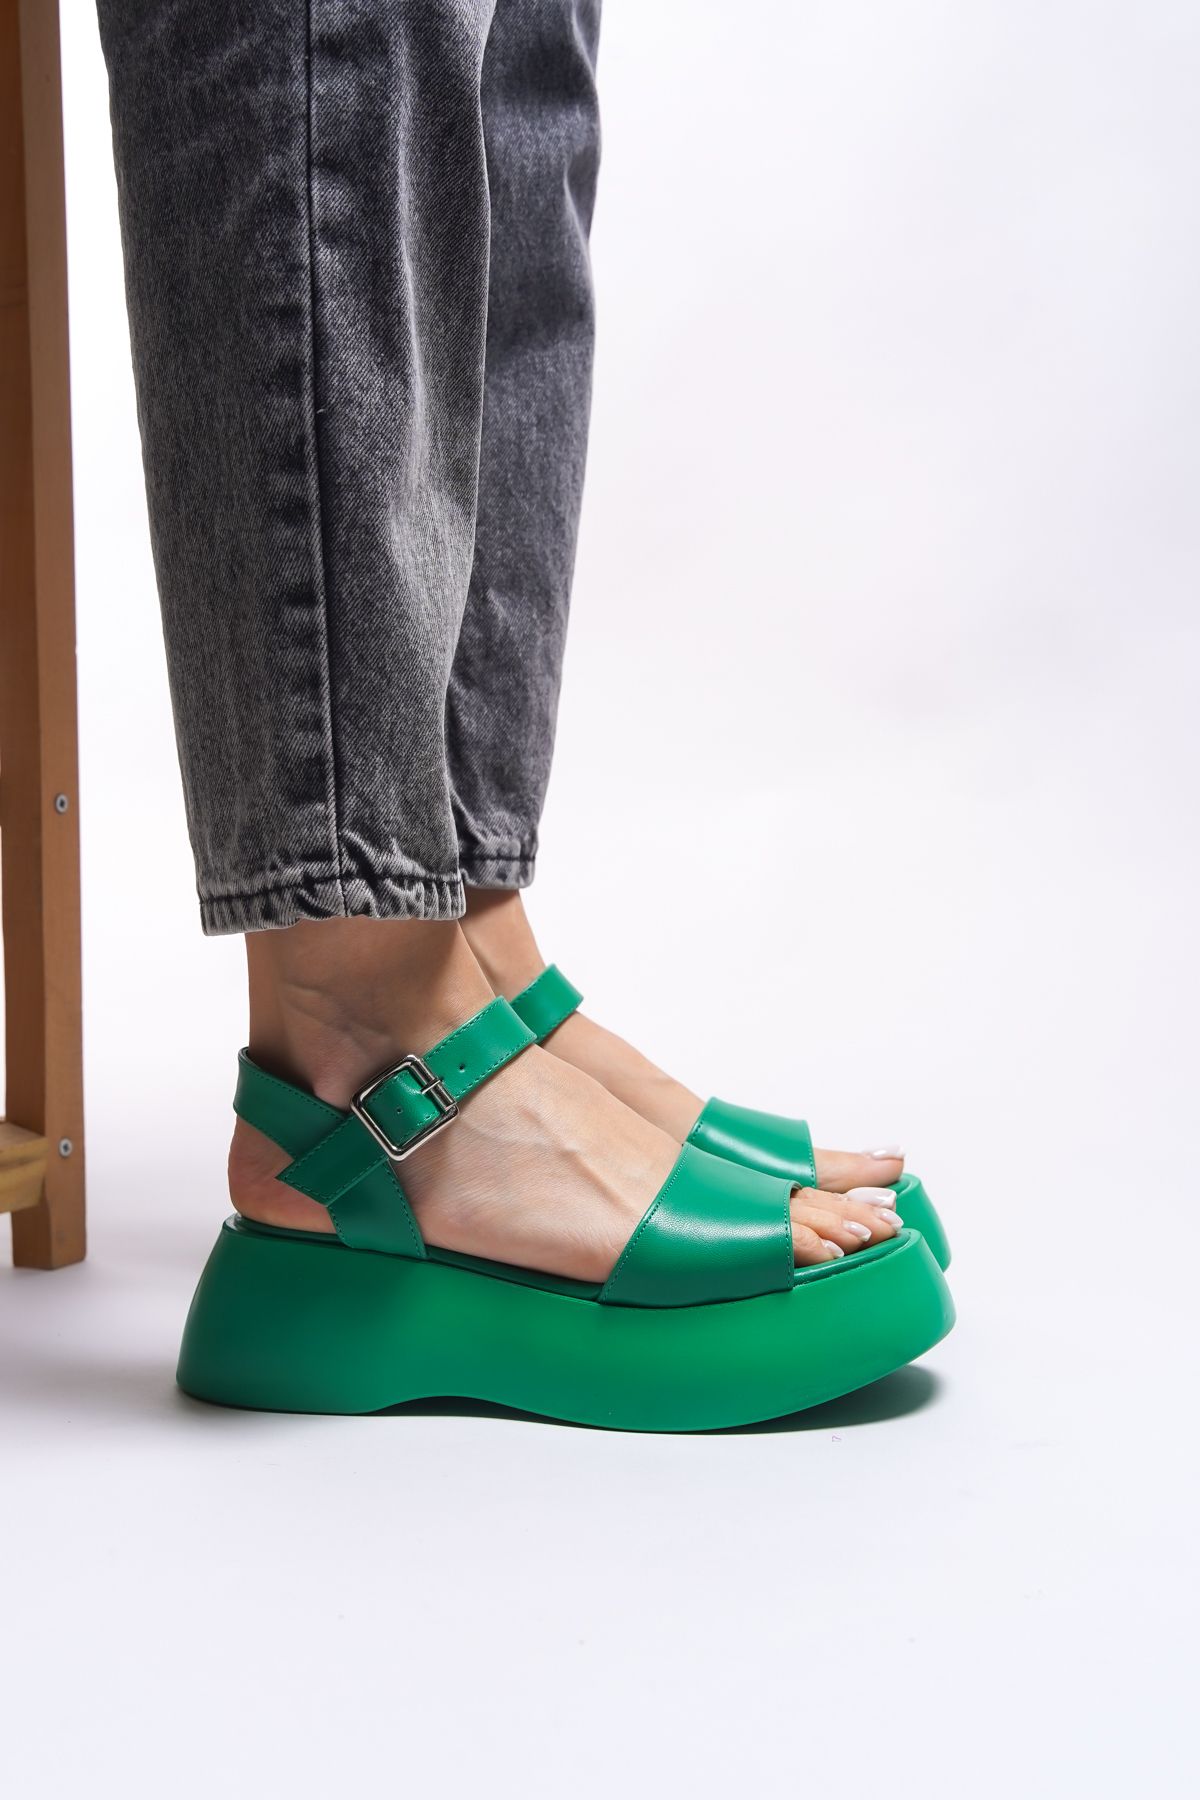 Riccon Alloshara Kadın Sandalet 0012801 Yeşil Cilt